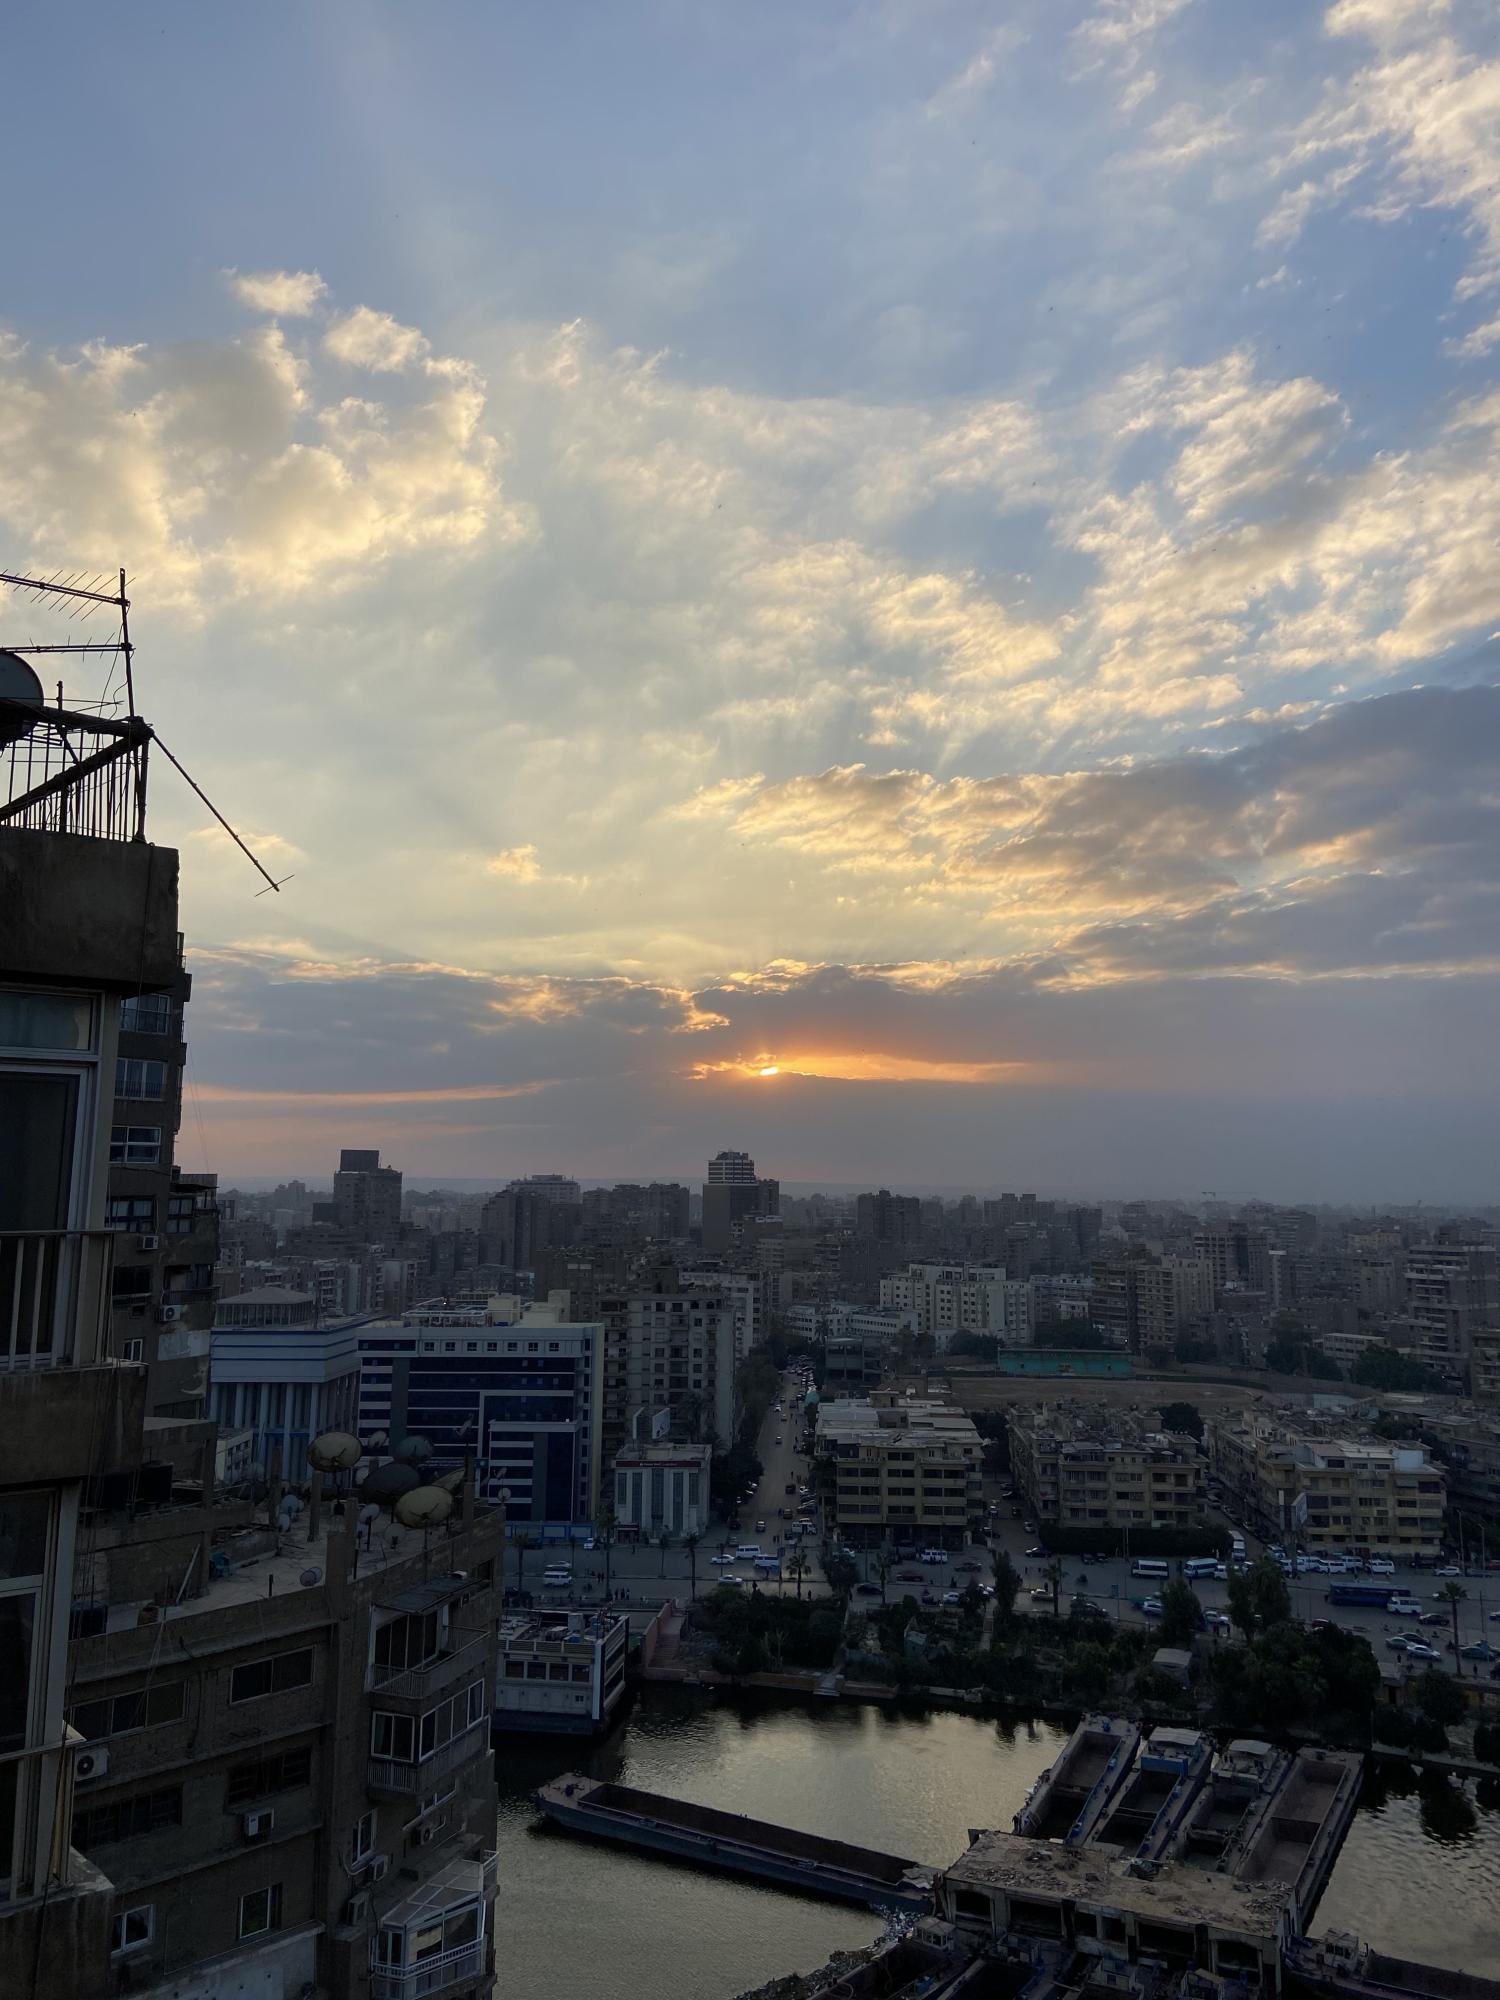 Sunset in Cairo, Egypt